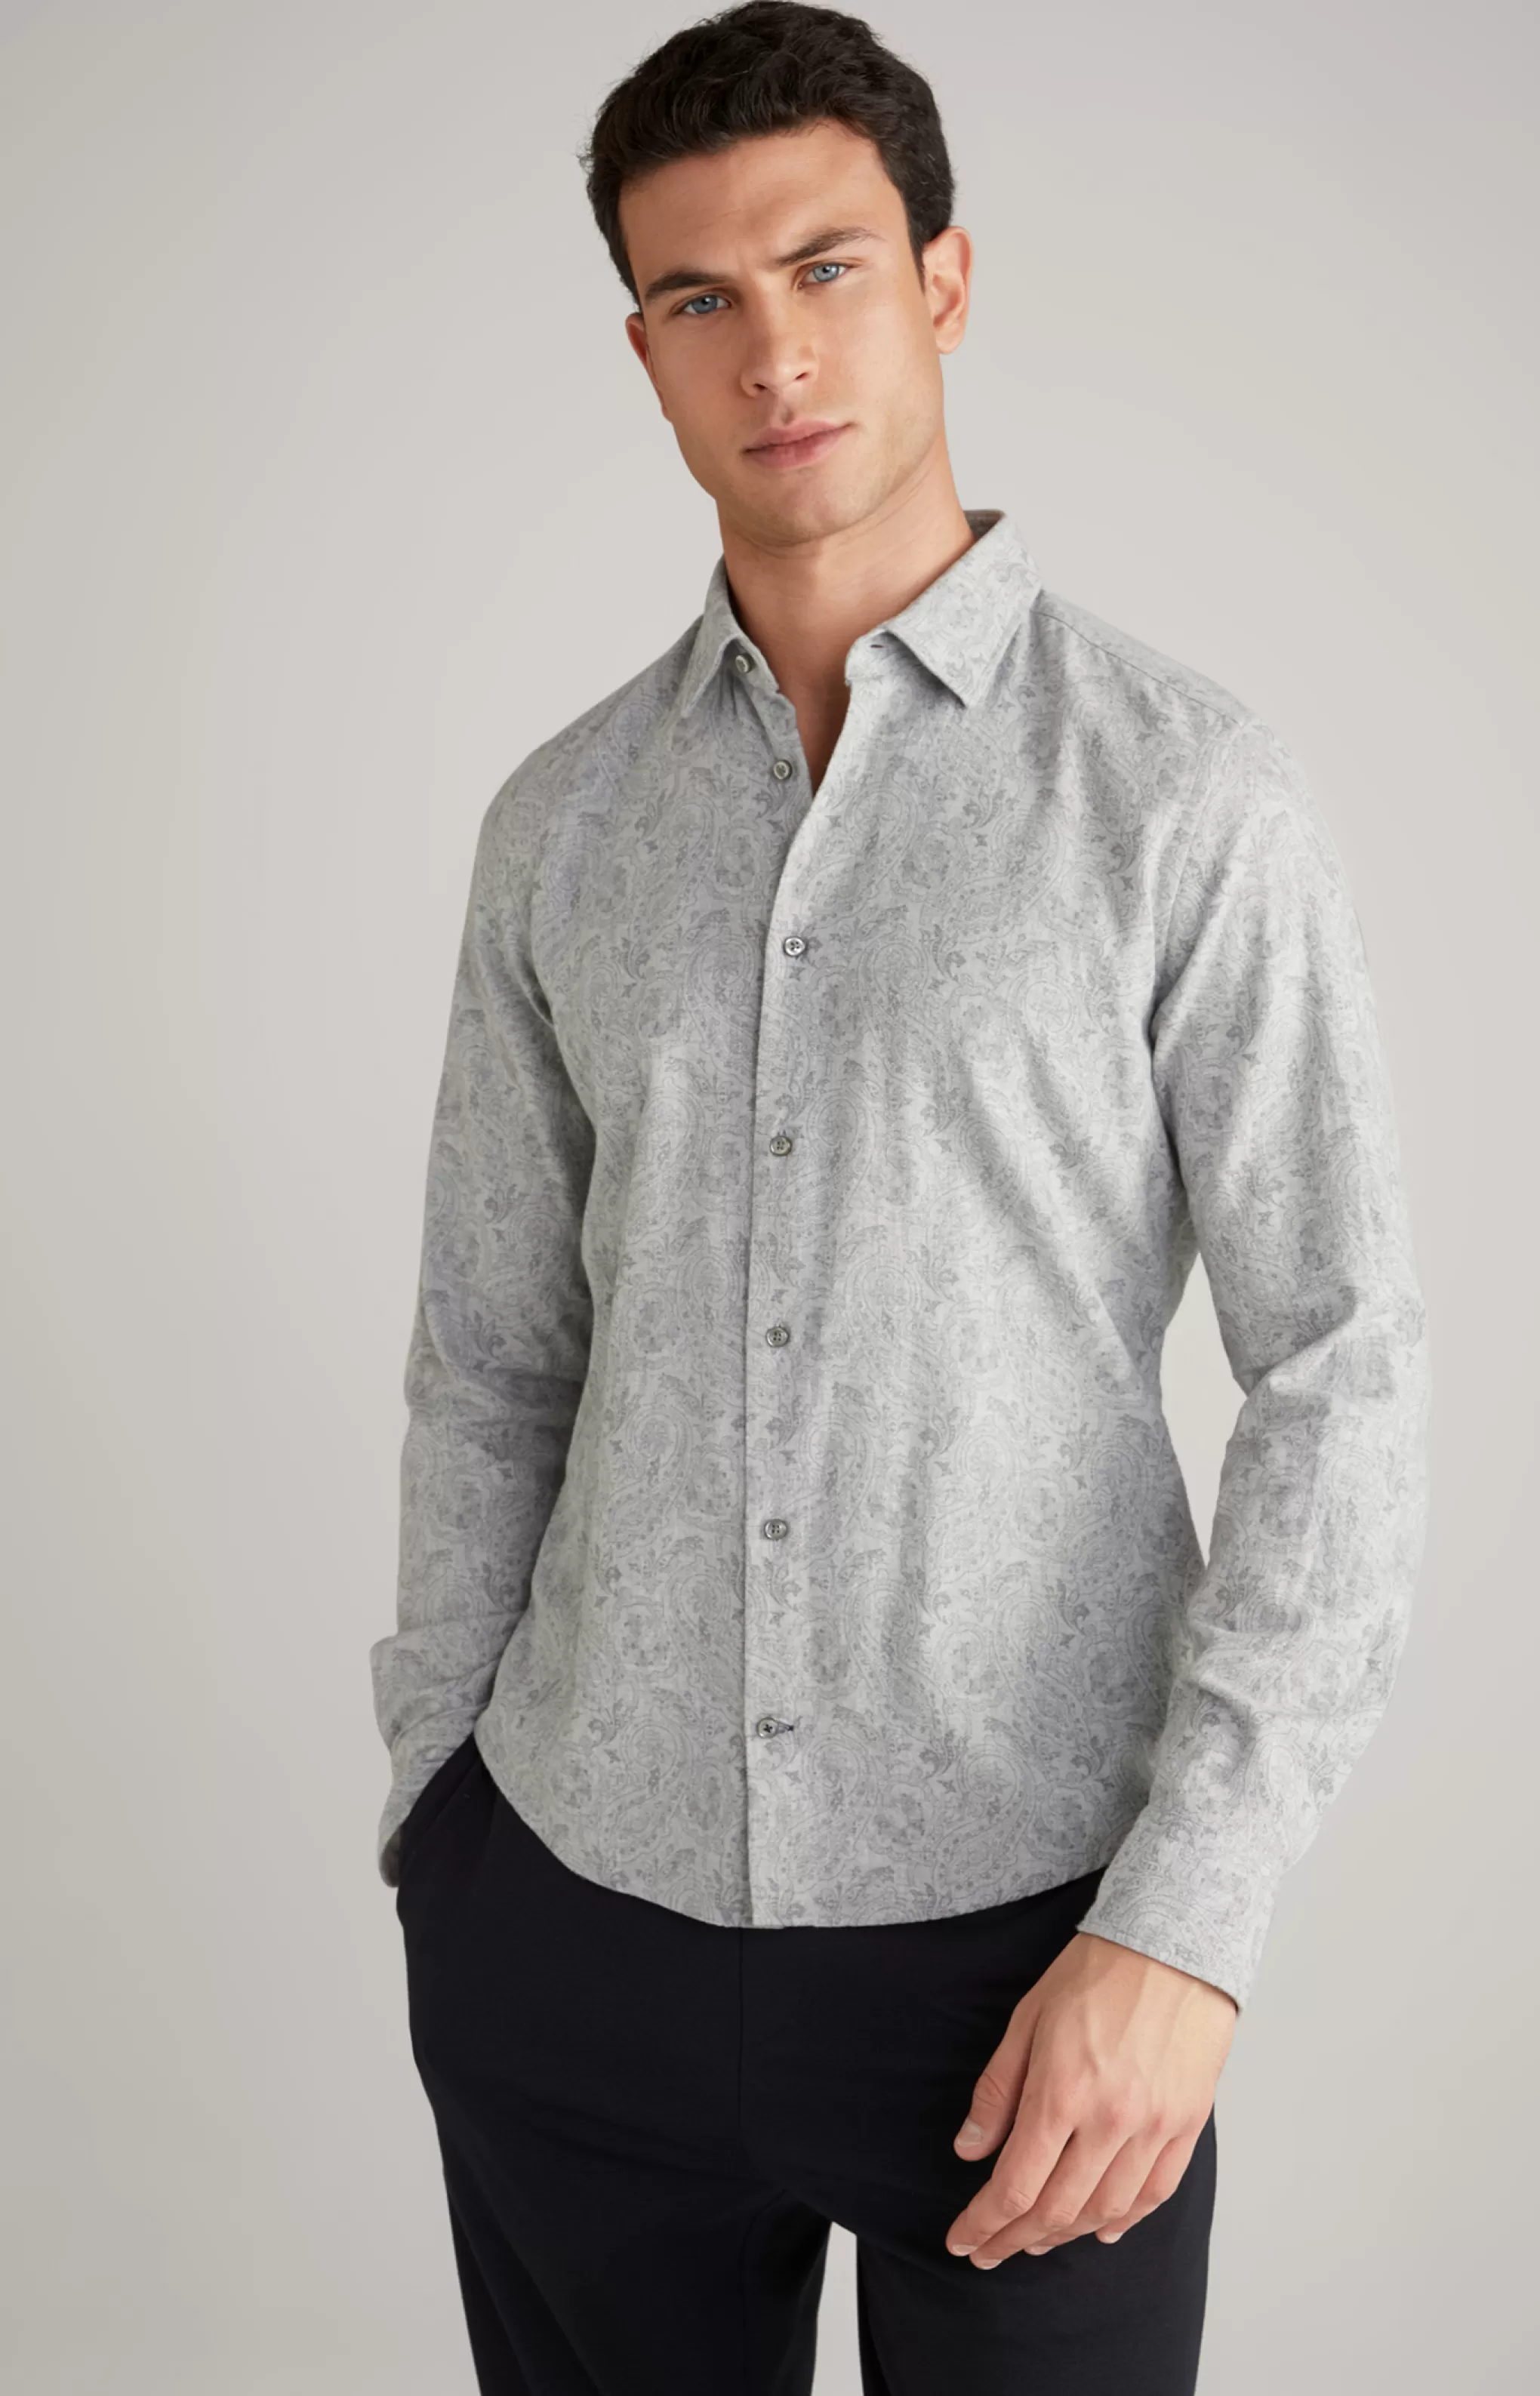 Shirts*JOOP Shirts Pit Cotton Shirt in Light Grey, patterned